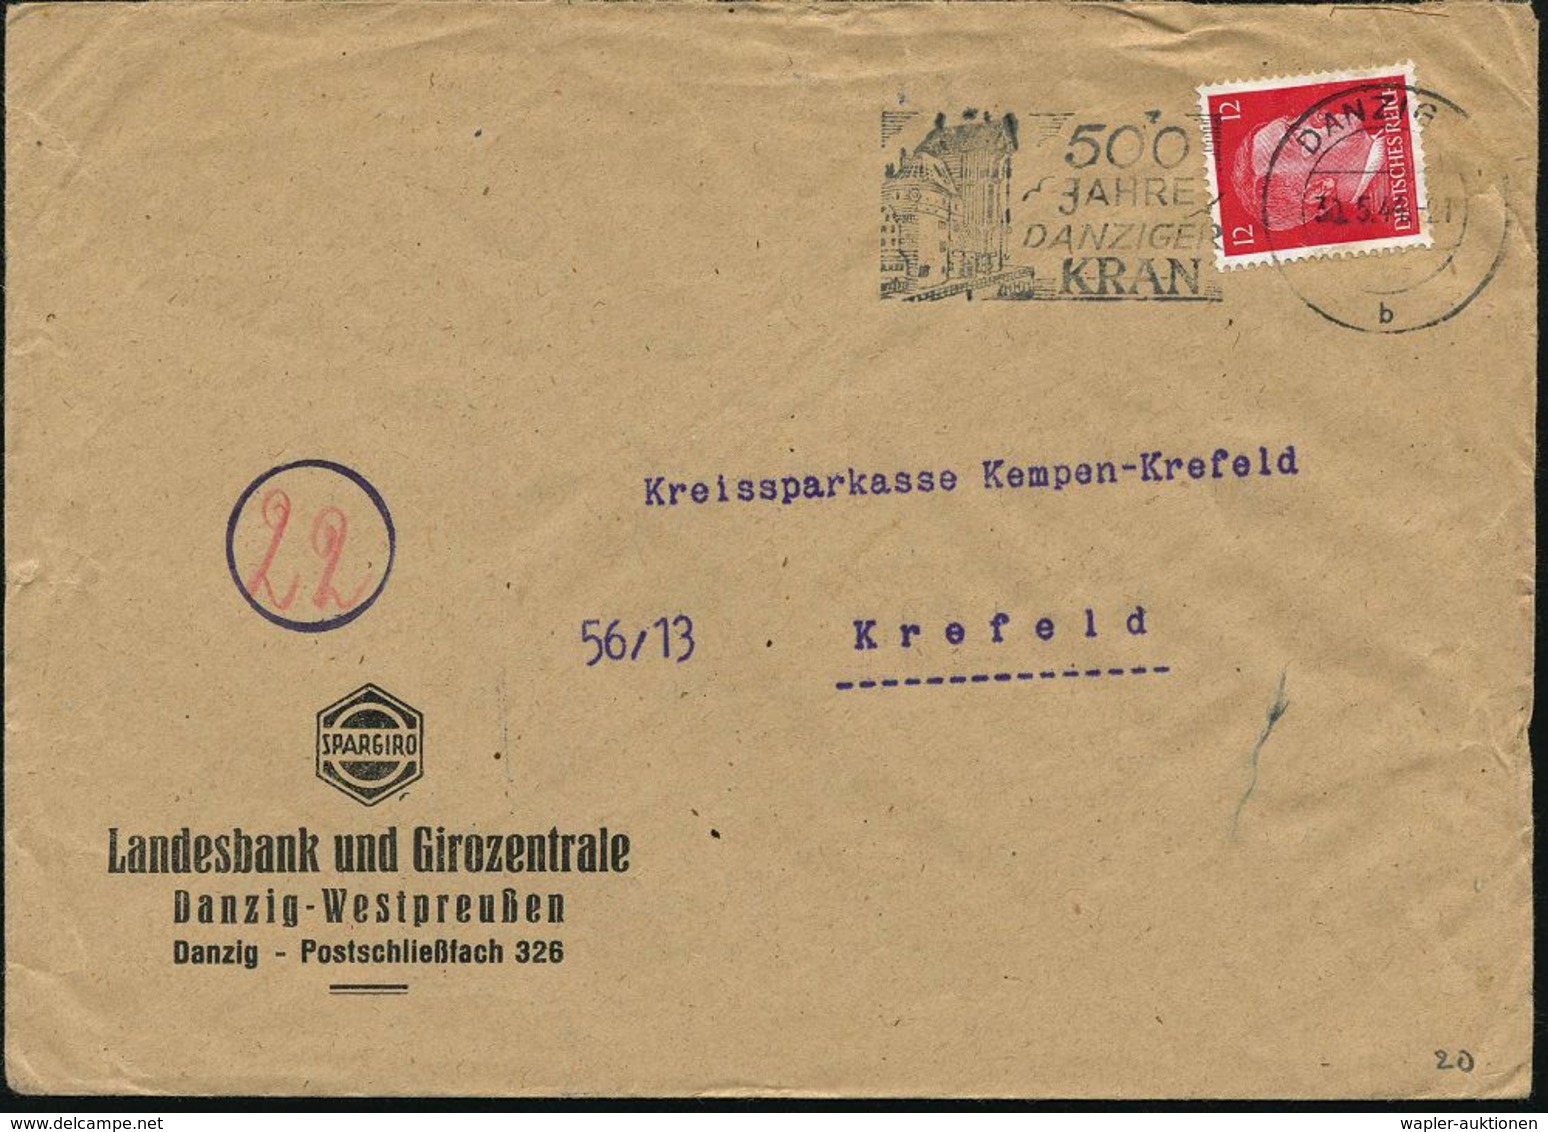 BERÜHMTE BAUWERKE & MONUMENTE : DANZIG 5/ B/ 500/ JAHRE/ DANZIGER/ KRAN 1944 (30.5.) MWSt = Krantor , Firmen-Bf.: Landes - Denkmäler